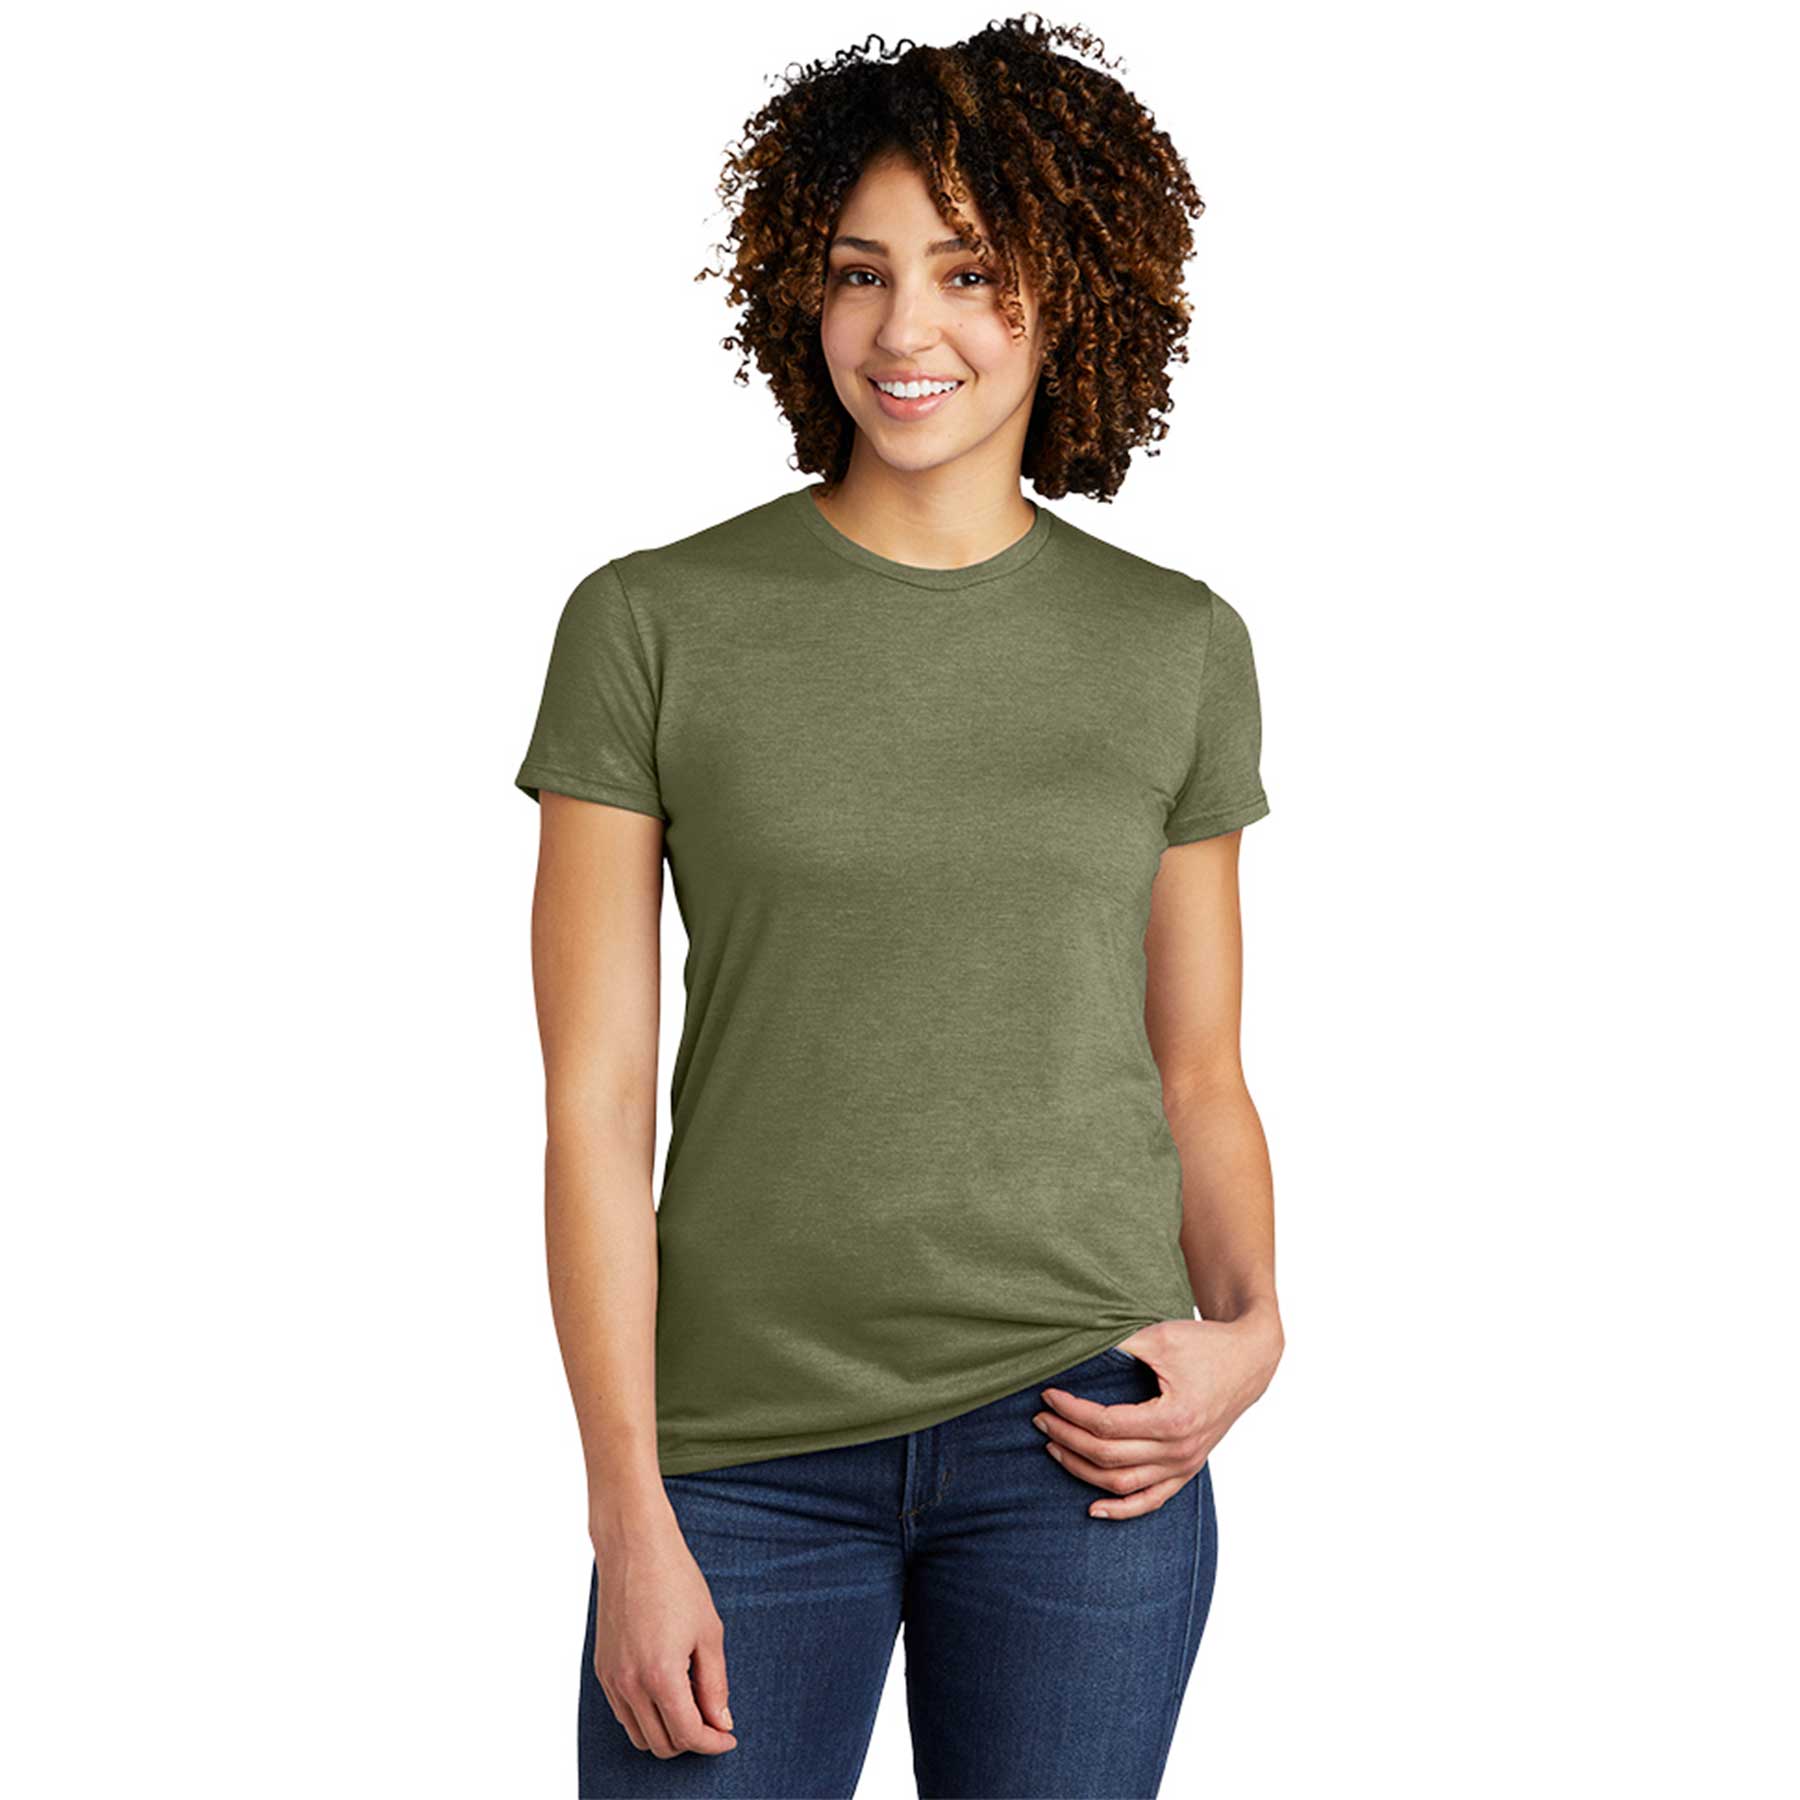 Apparel Catalog Women's T-Shirts